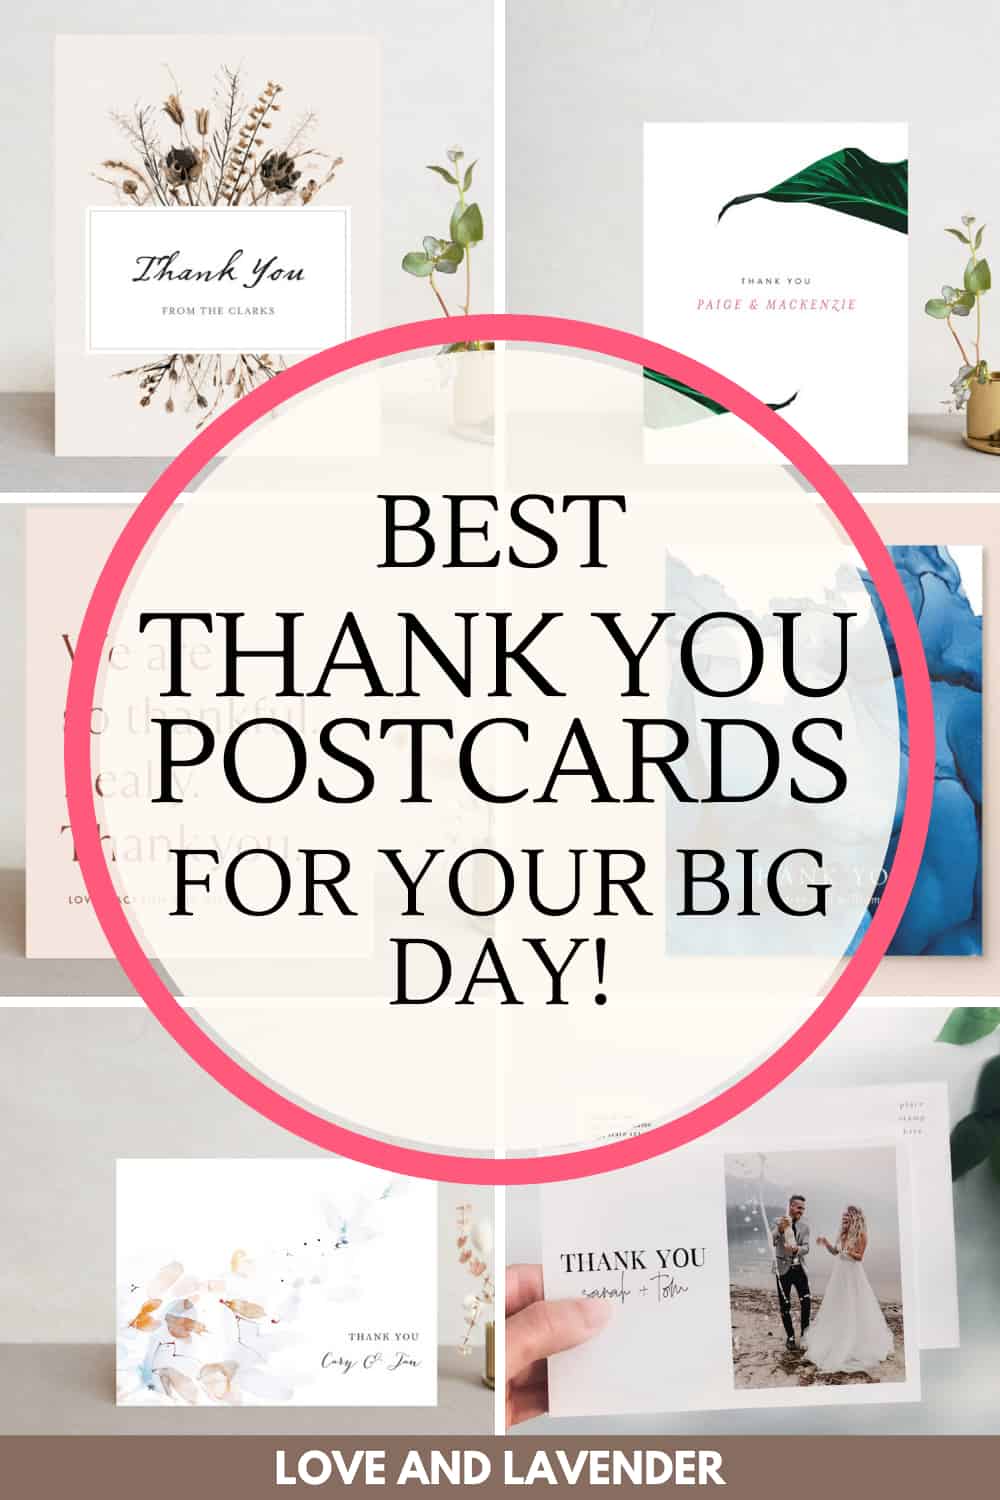 Pinterest pin - Thank you postcards